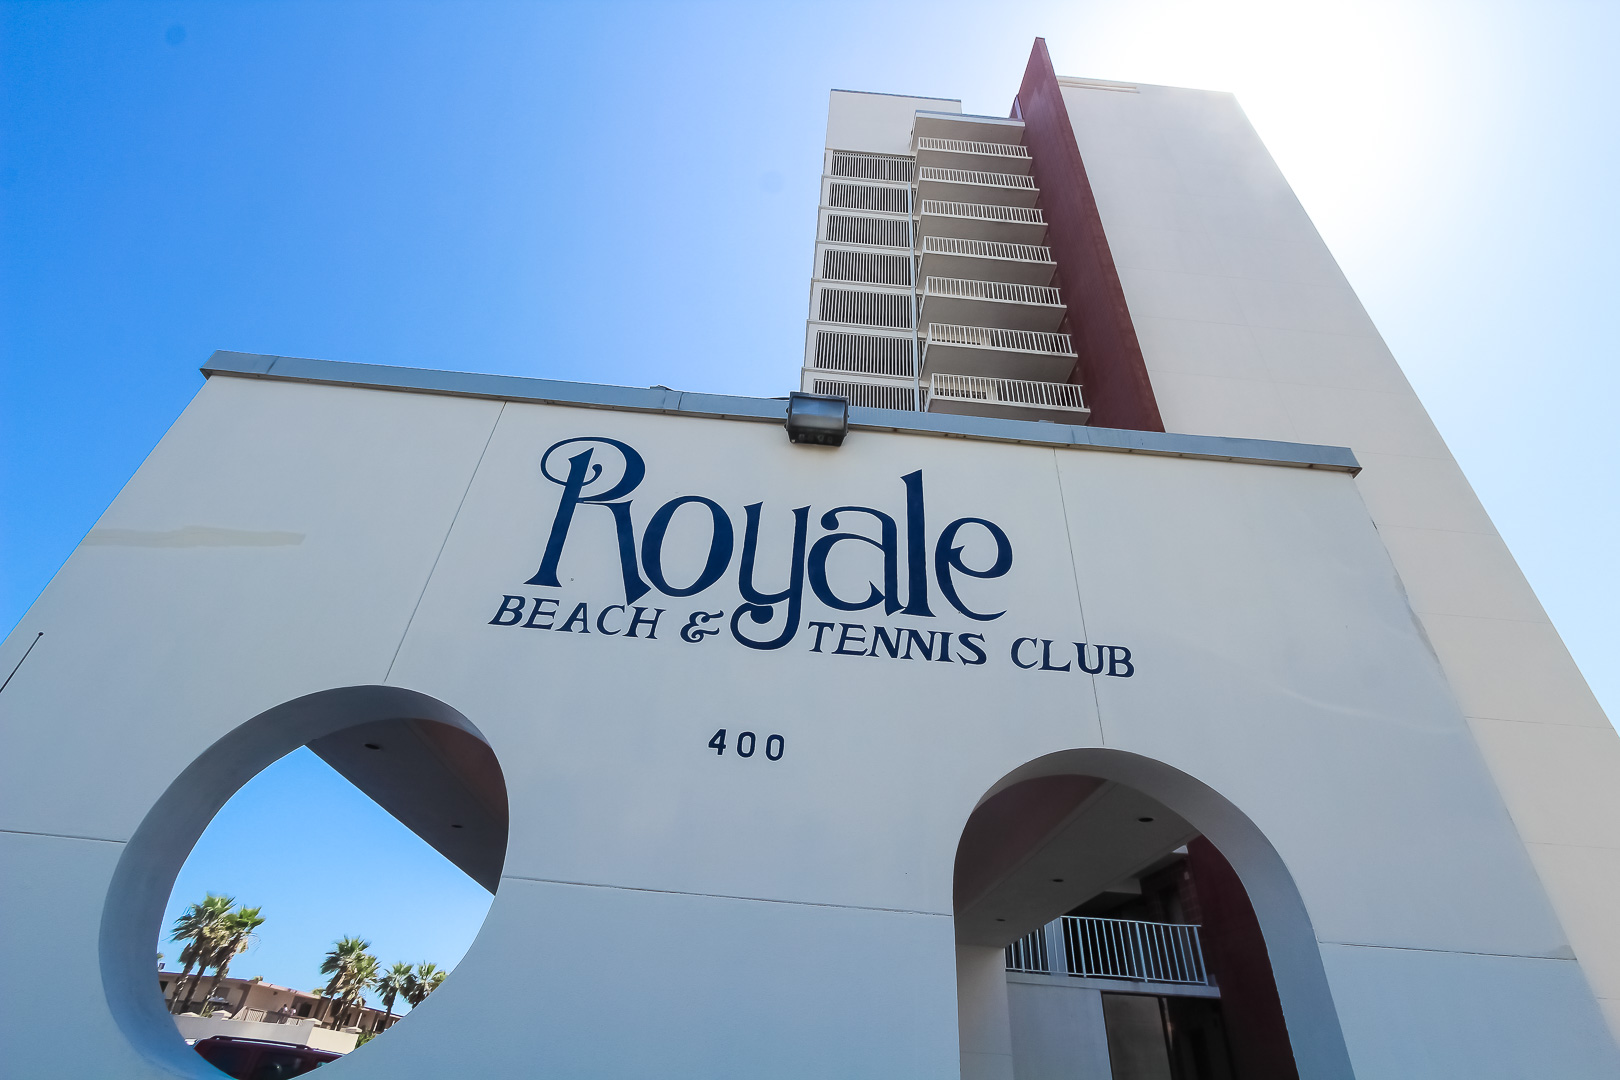 Resort signage at VRI's Royale Beach Tennis Club in Texas.